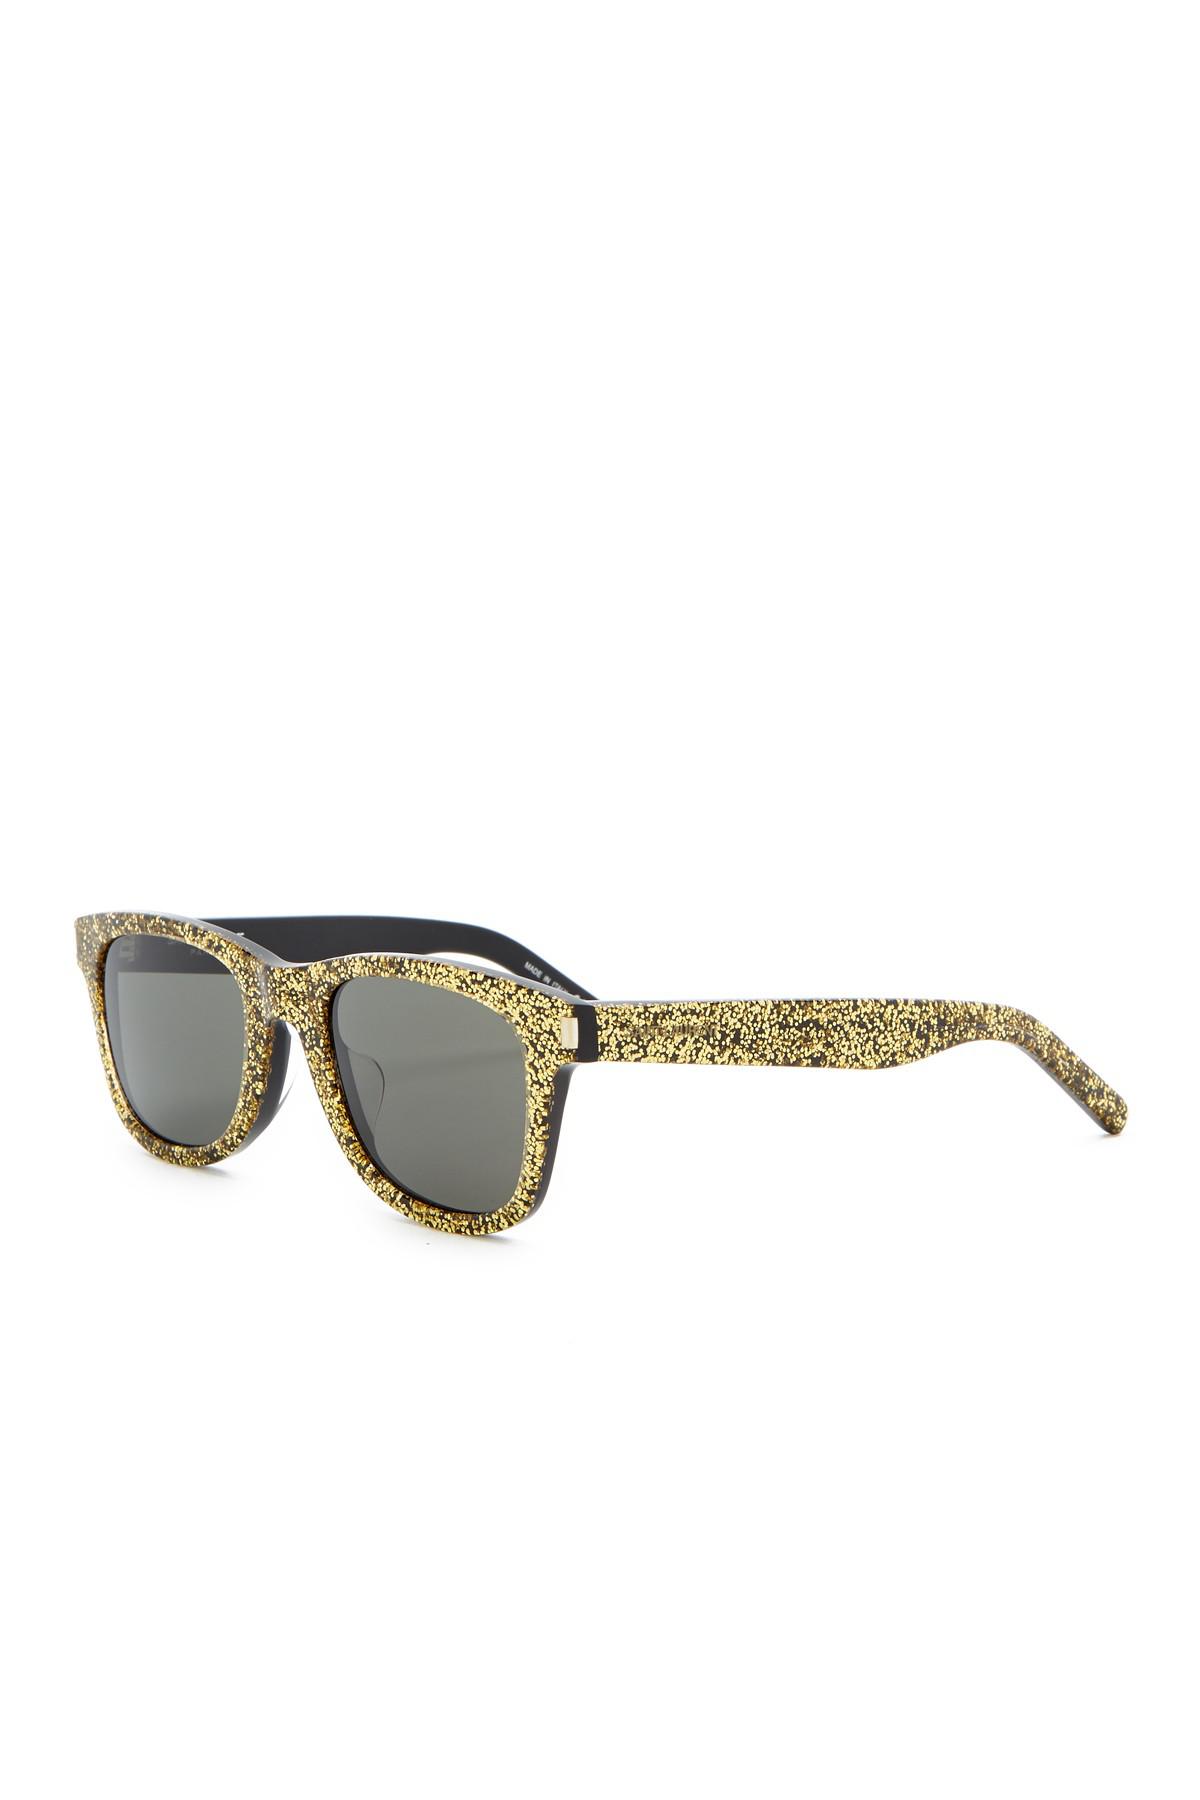 Saint Laurent 50mm Glitter Square Sunglasses in Metallic | Lyst